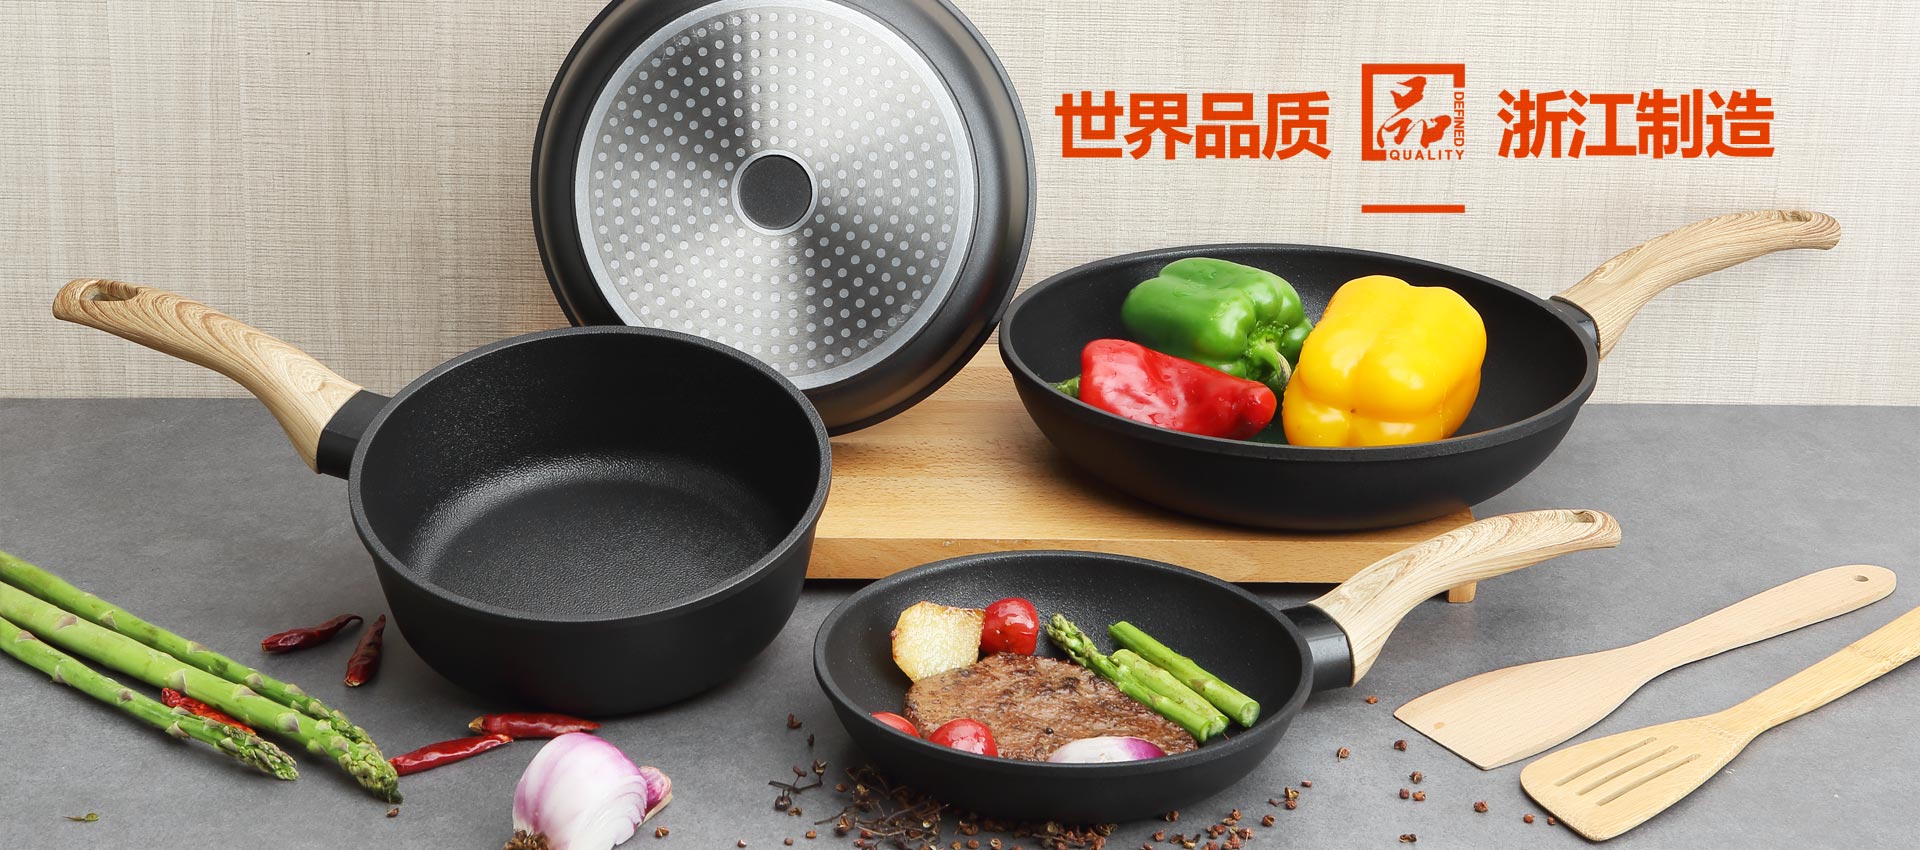 China Aluminium Cookware Suppliers